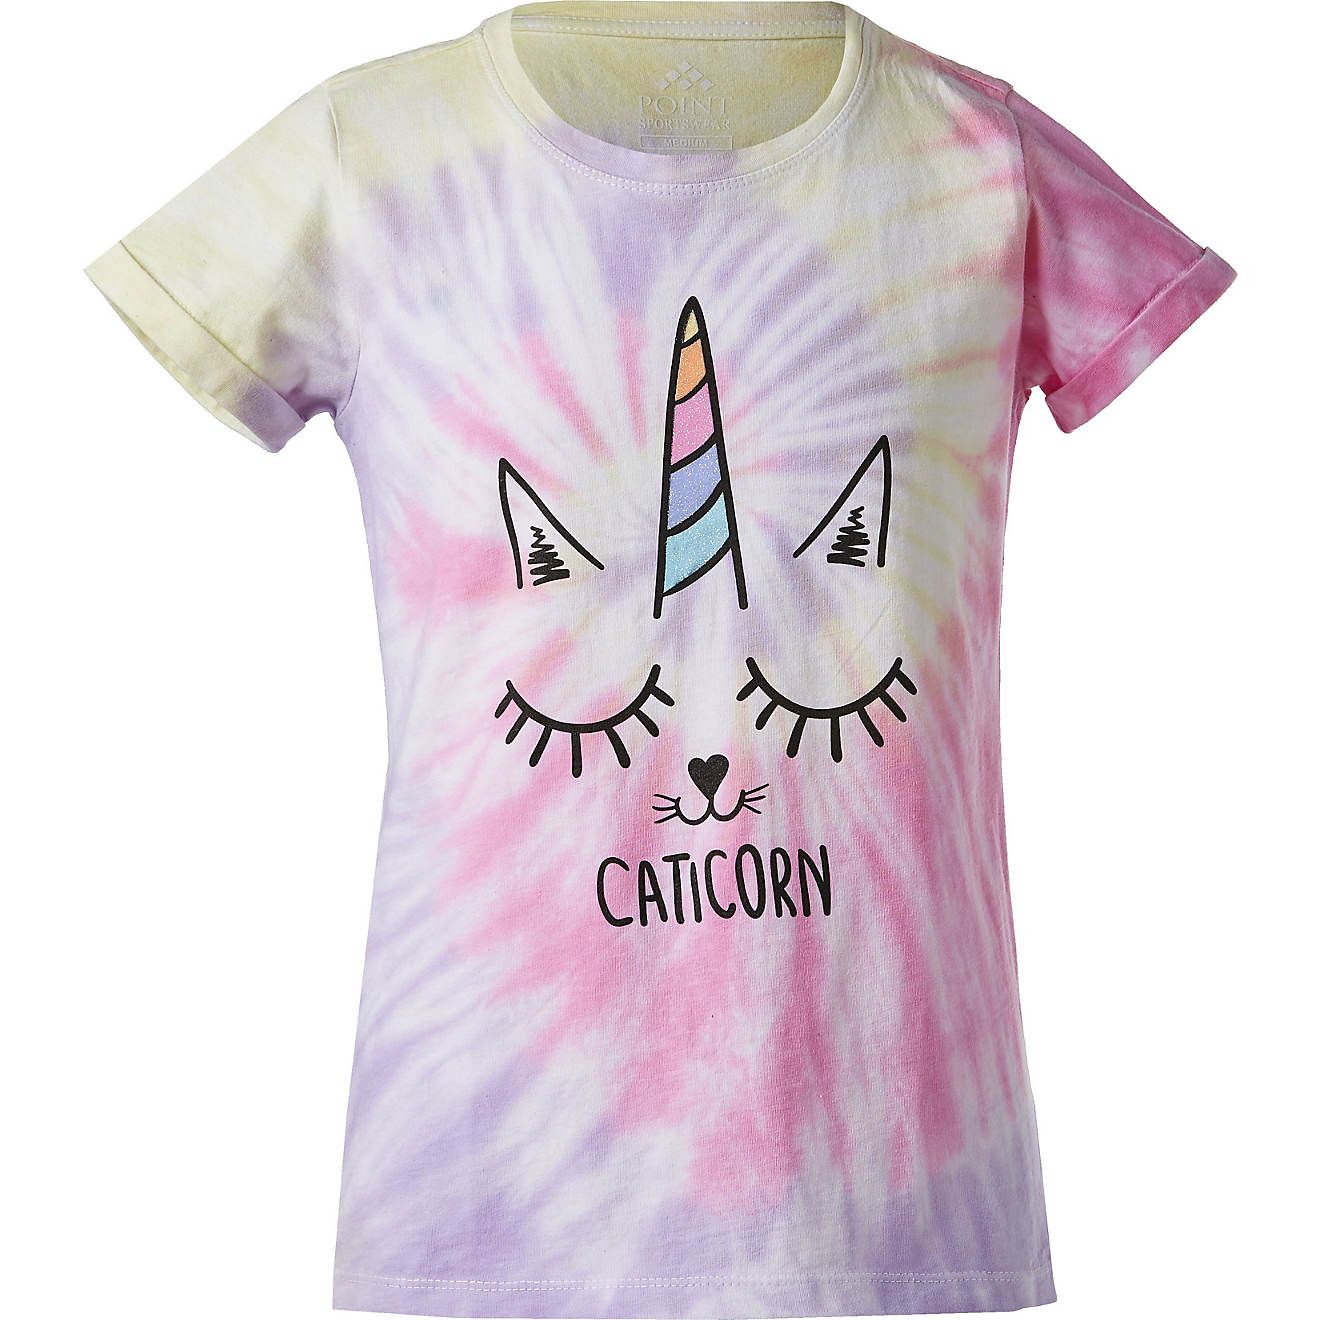 POINT Sportswear Girls' Caticorn Short-Sleeve Tie-Dye Graphic T-shirt | Academy Sports + Outdoor Affiliate